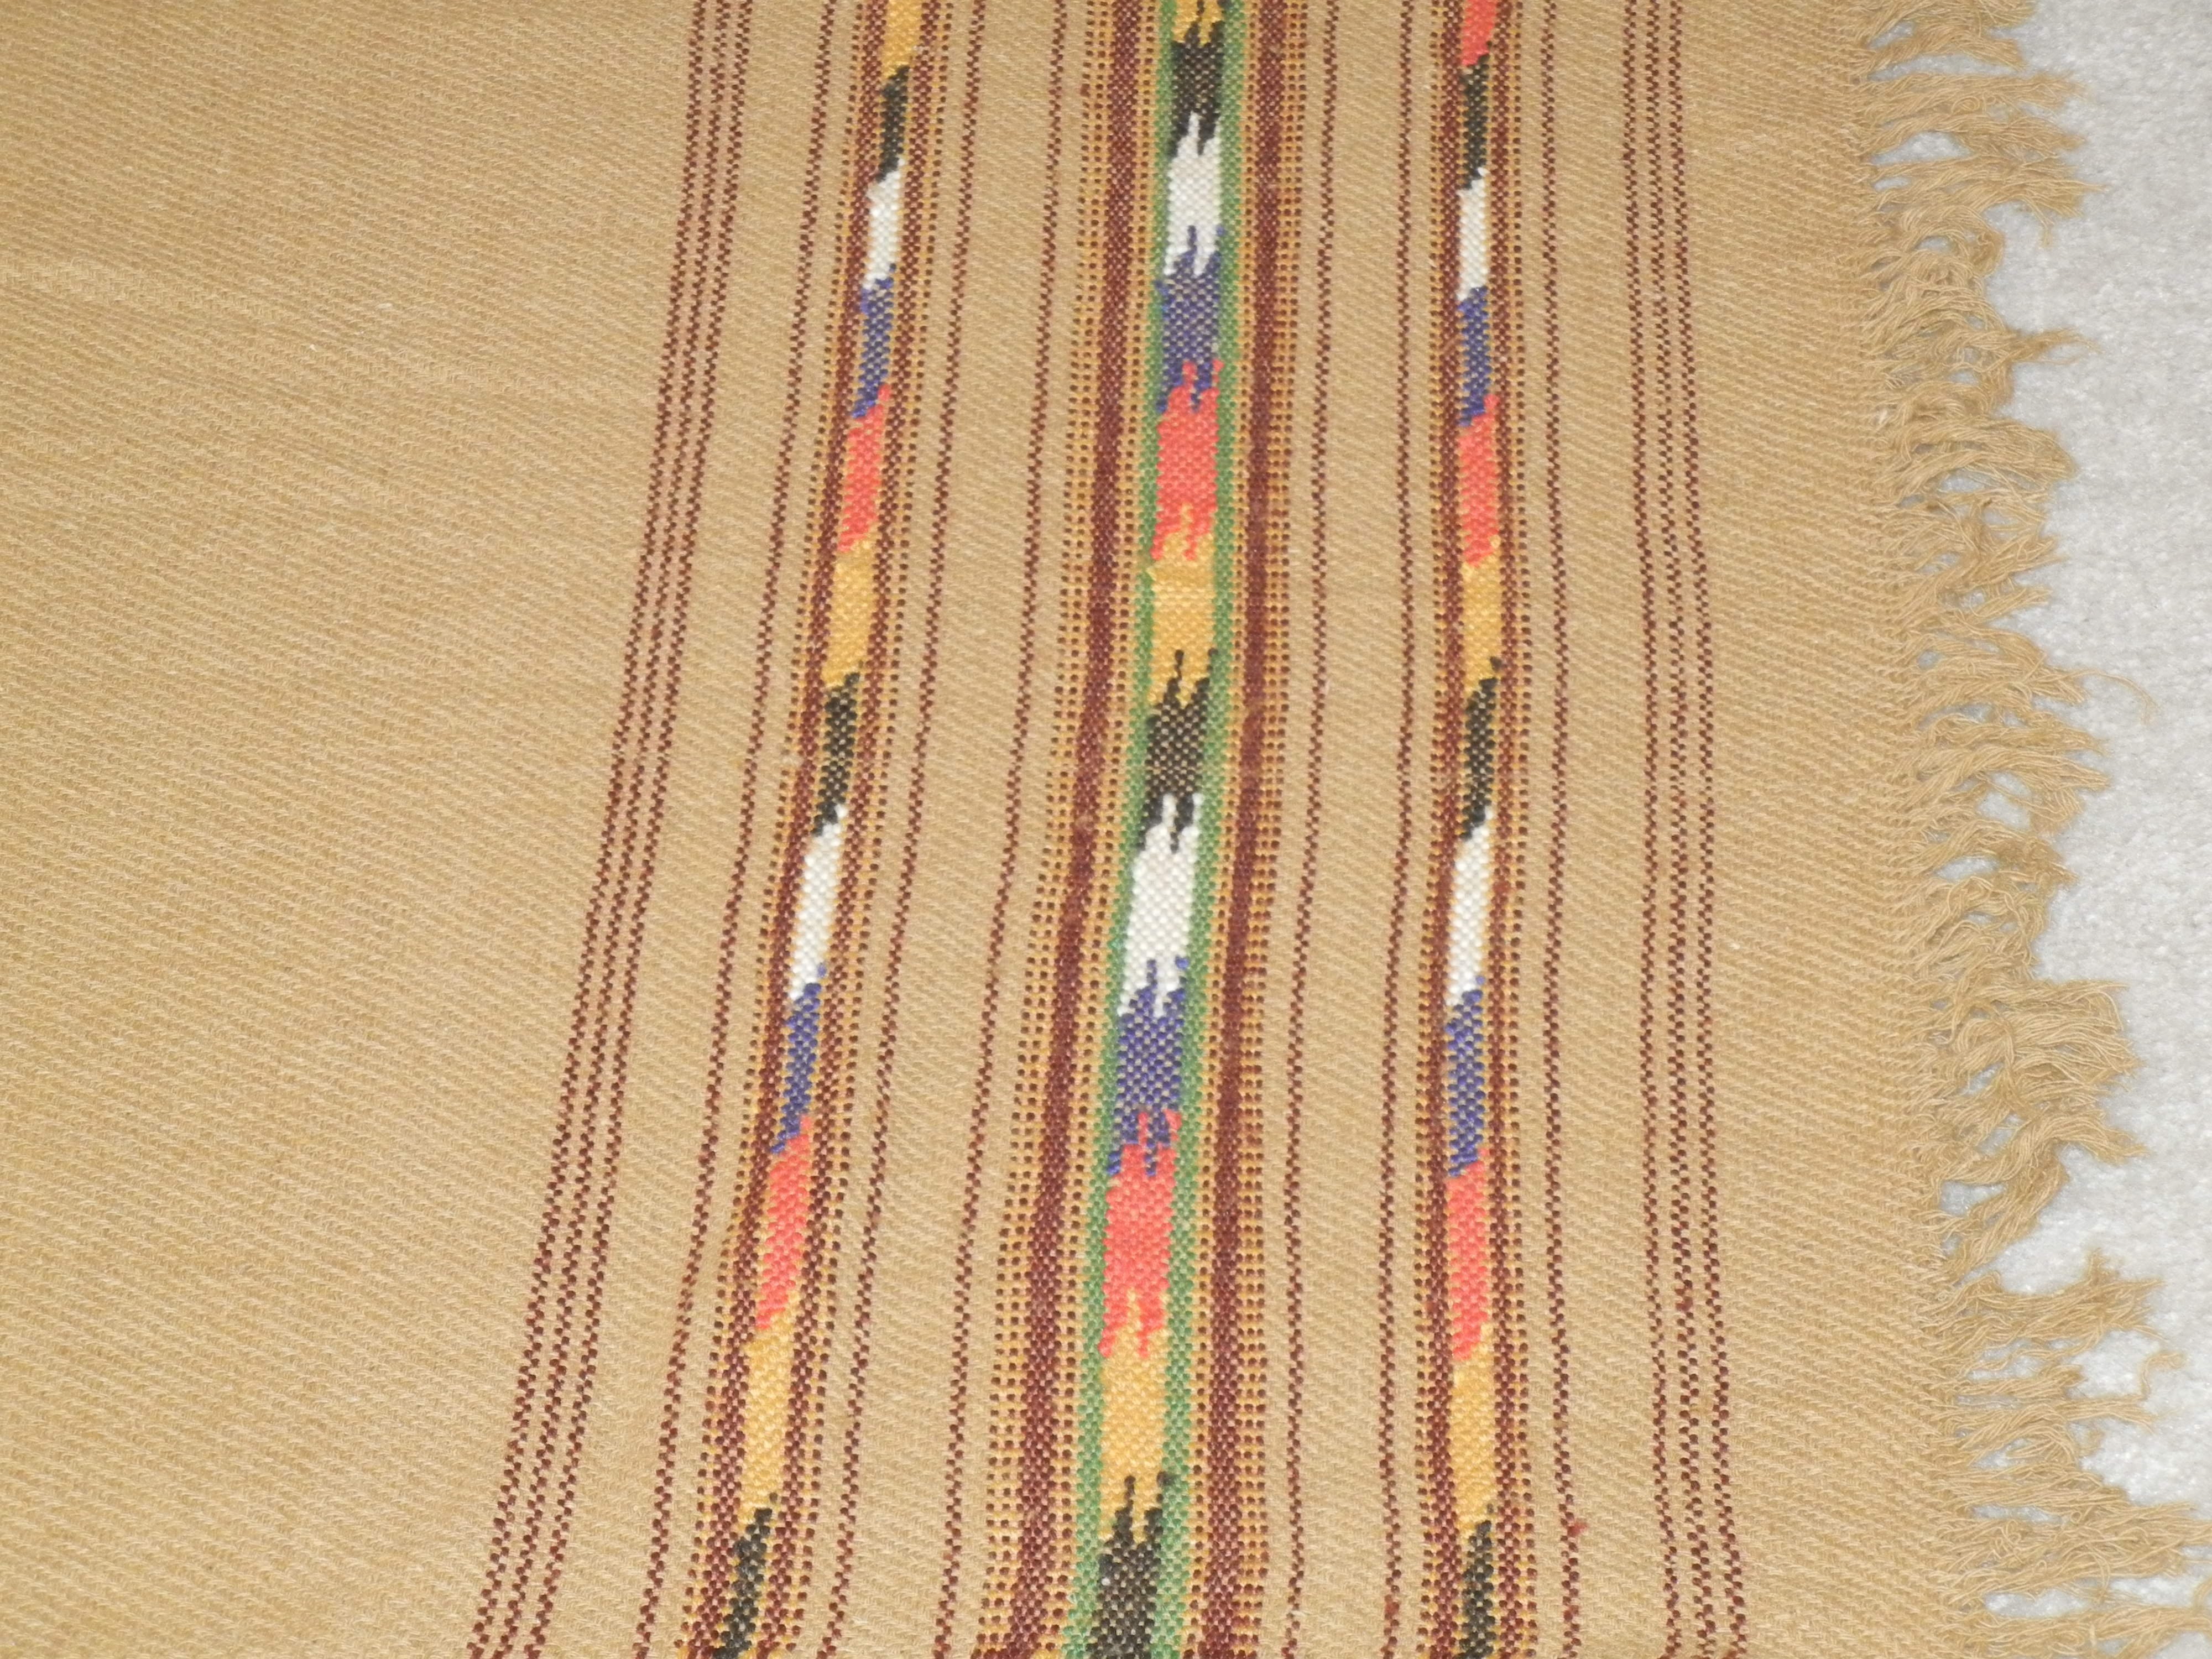 Khamta Sadar - 3 stripes design, Ethnic Gift from Pakistan, Large Shawl Blanket Wrap for men